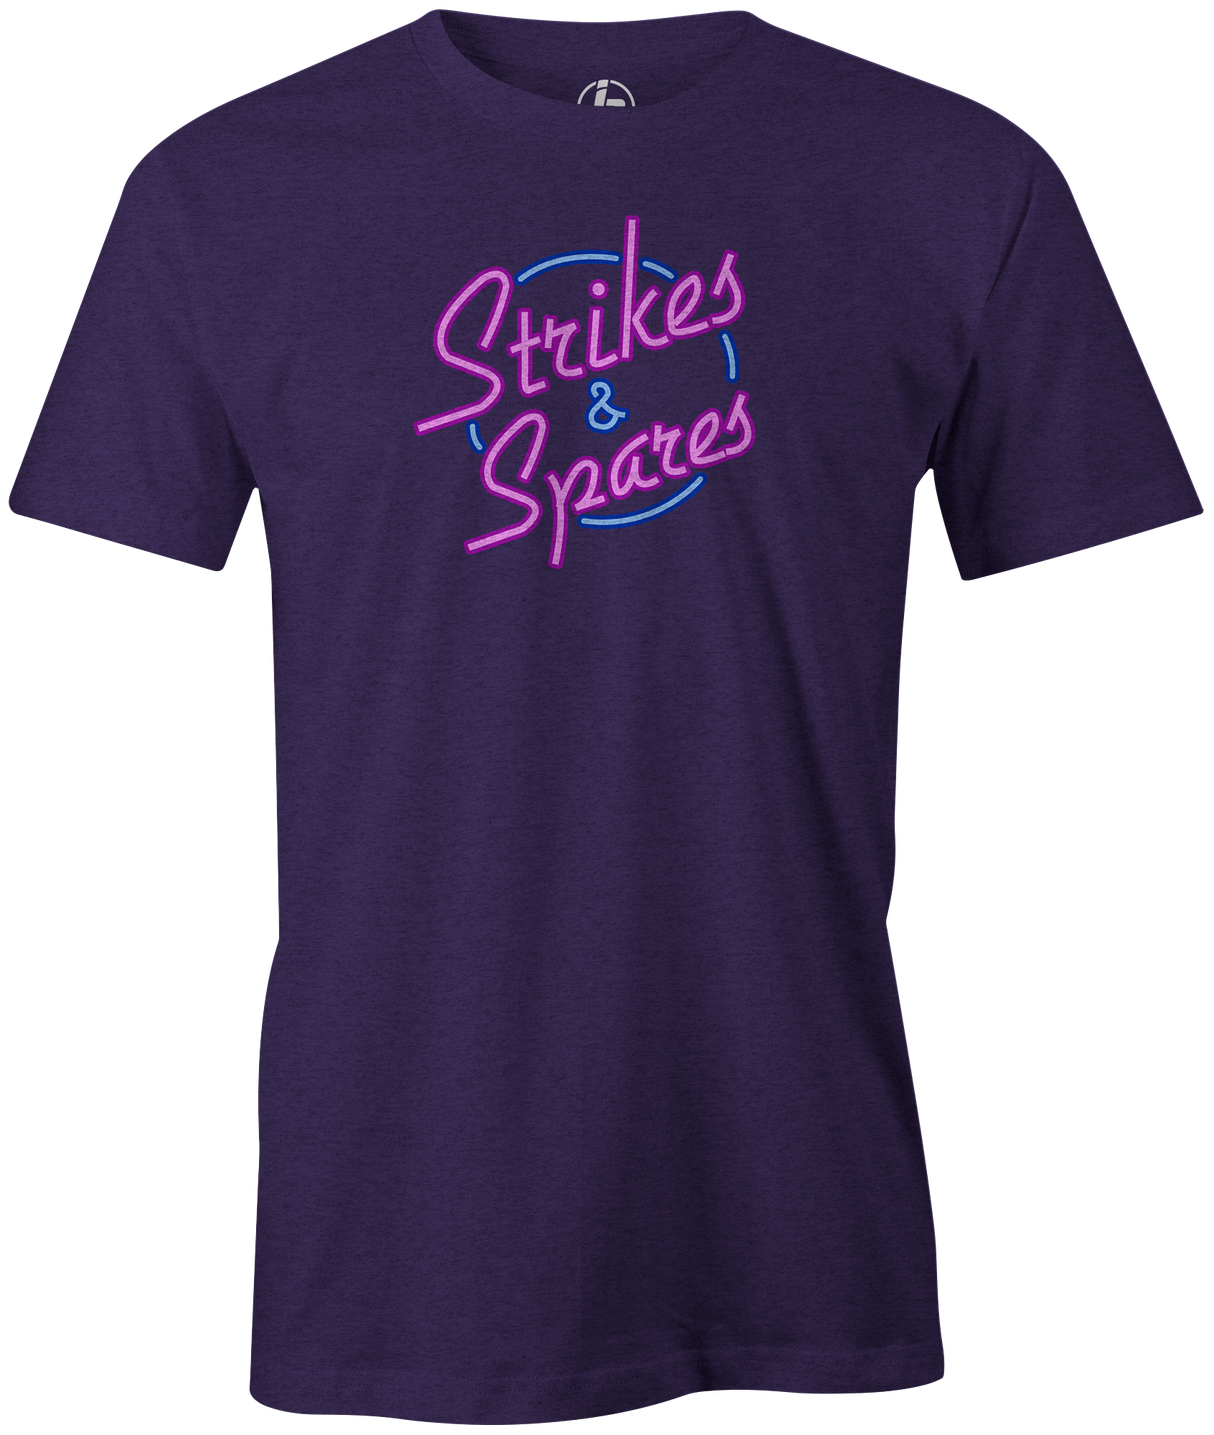 Spares and Strikes Men's T-shirt, Purple, Bowling, tee, tee-shirt, tee shirt, tshirt, cool, novelty. 